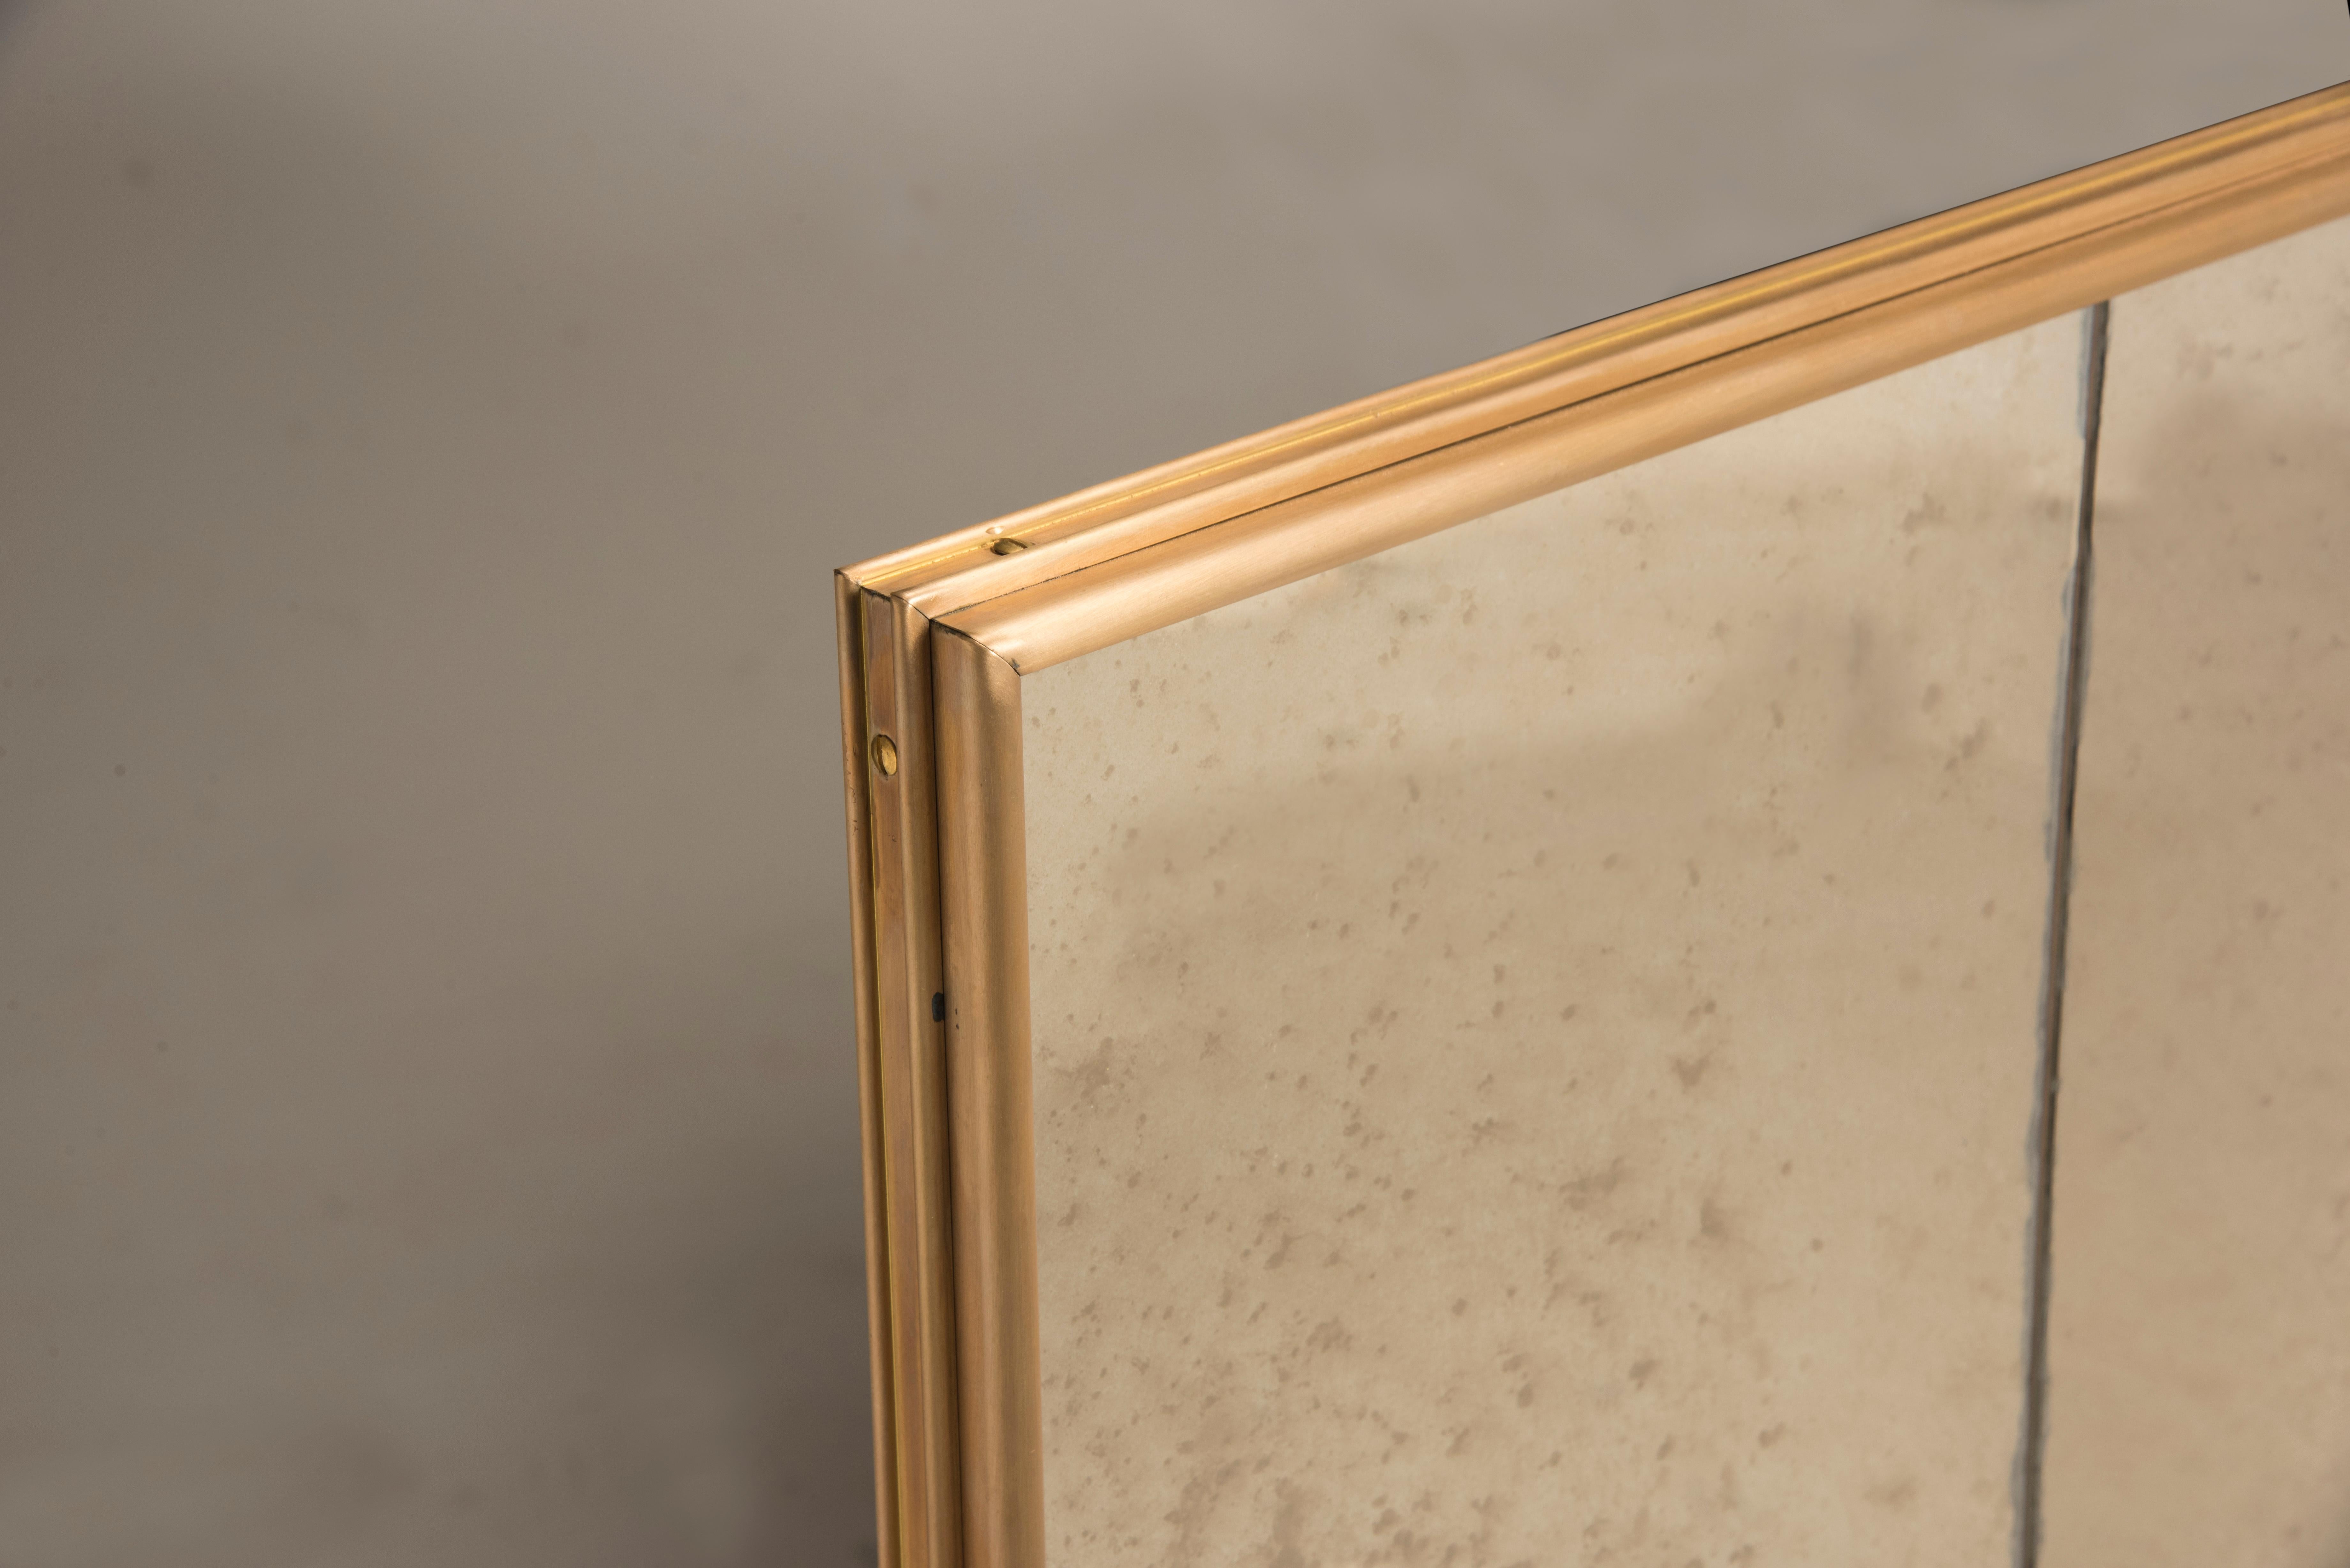 21st Century Rectangular Art Deco Style Paneled Brass Distressed Mirror 110x210 For Sale 1